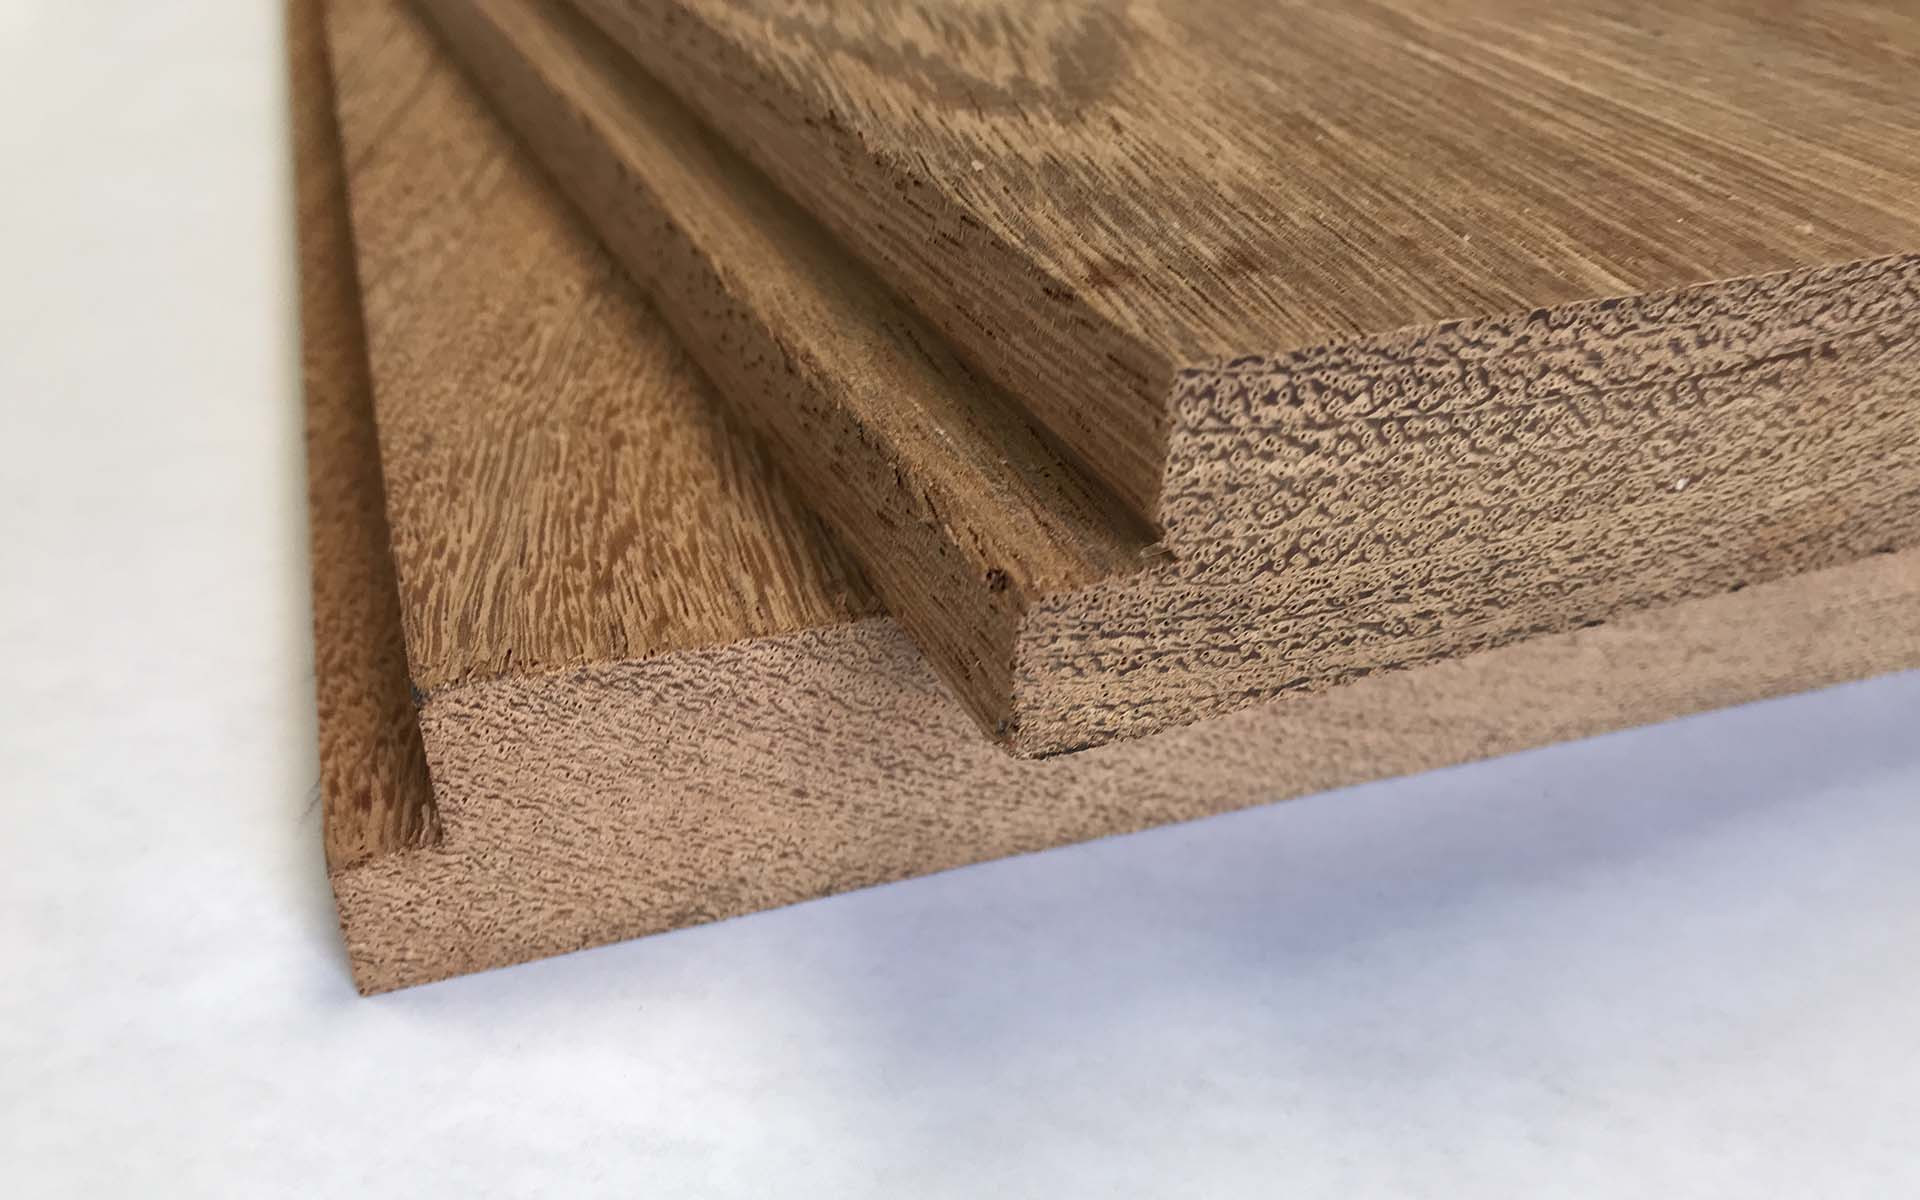 wholesale hardwood flooring suppliers of buy trailer decking apitong shiplap rough boards truck flooring throughout 3 angelim pedra shiplap close up